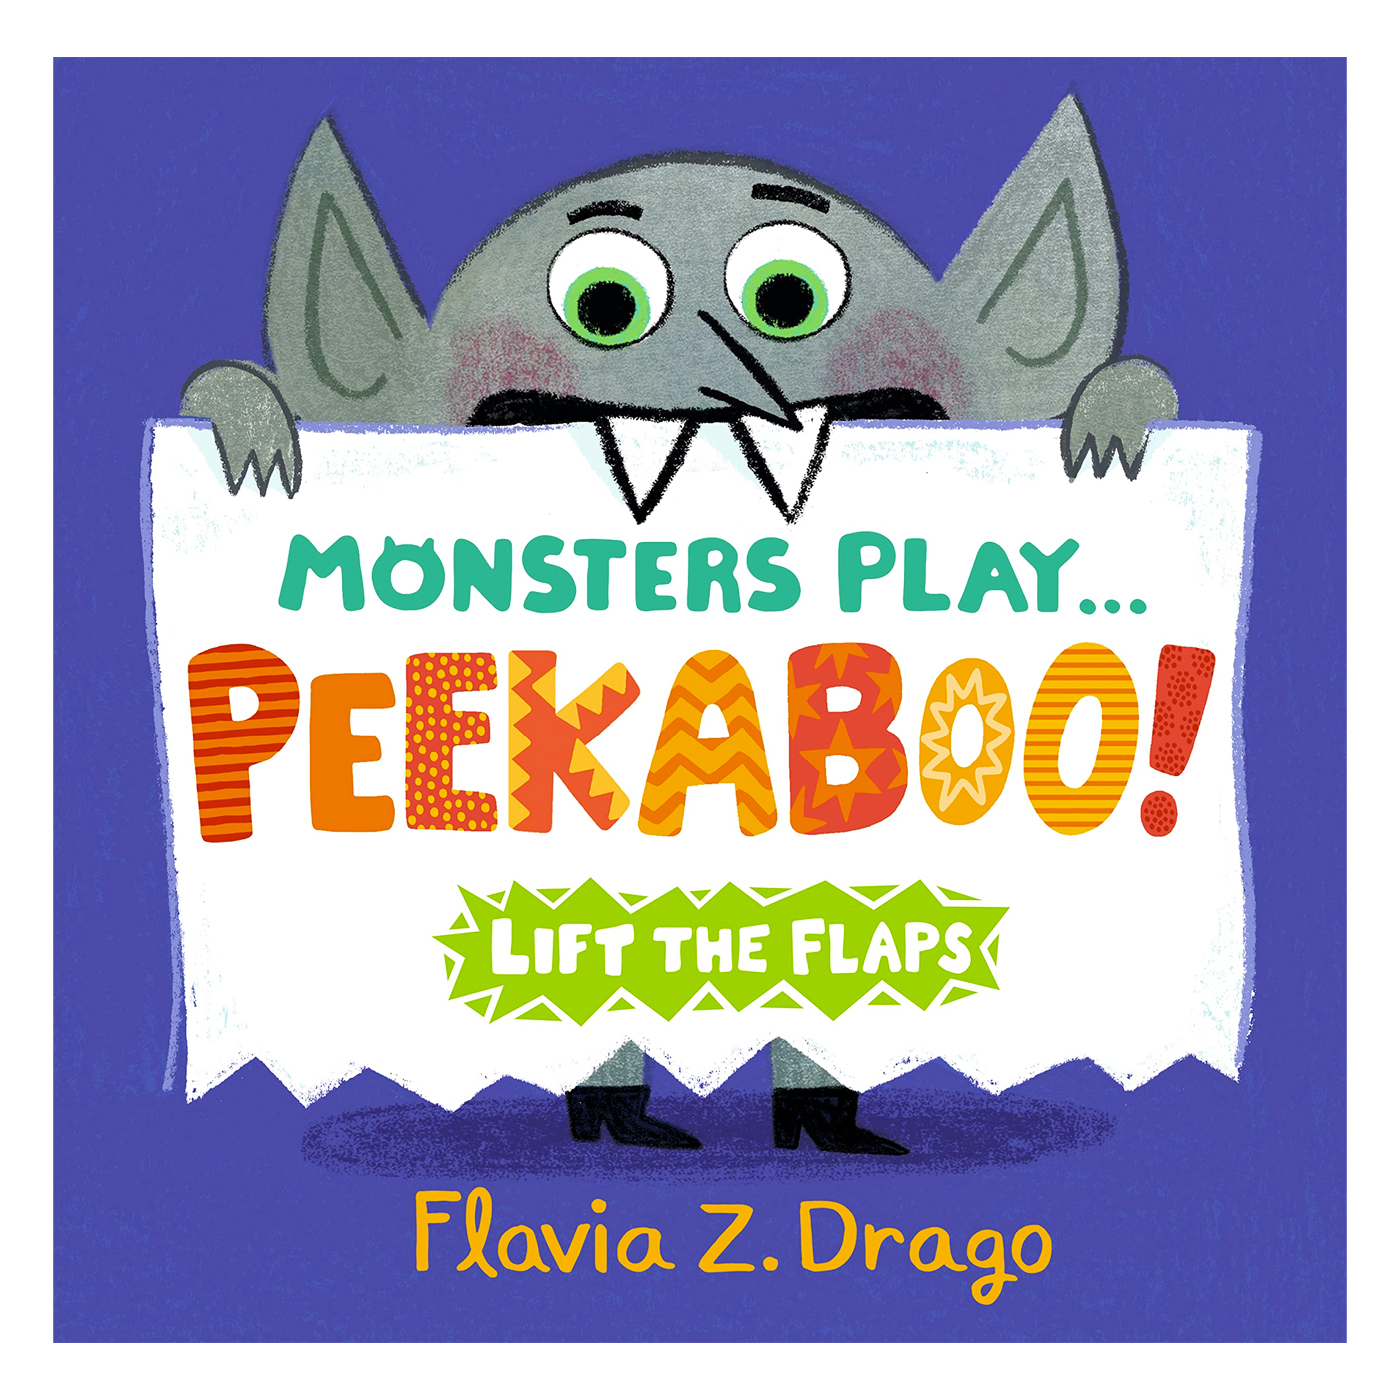  Monsters Play... Peek-A- Boo!